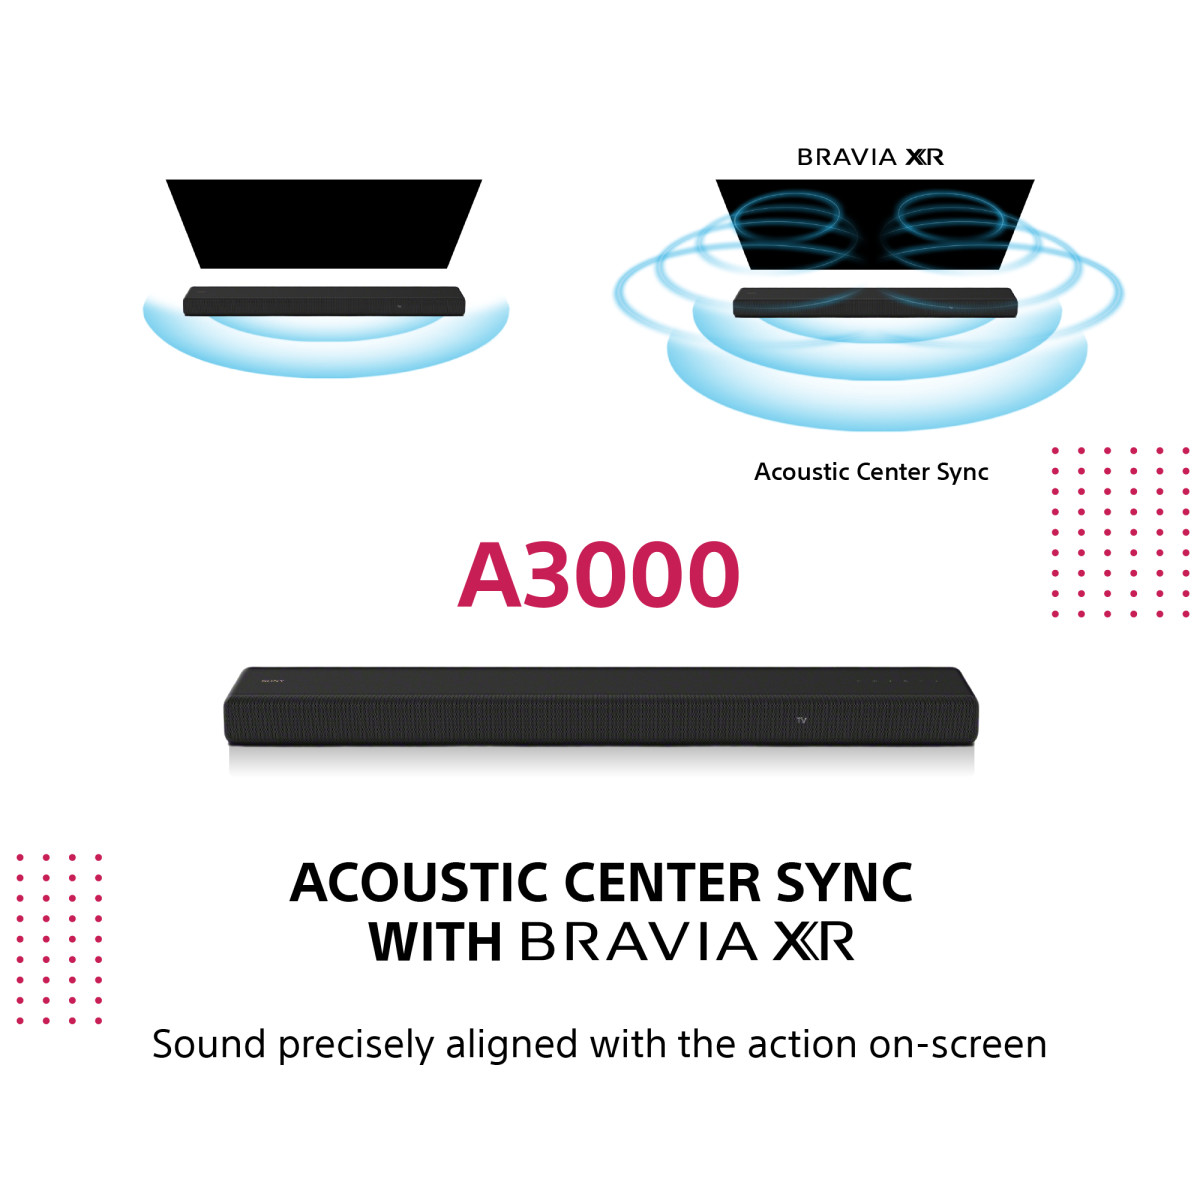 360 Spatial Dolby Atmos 3.1ch Soundbar